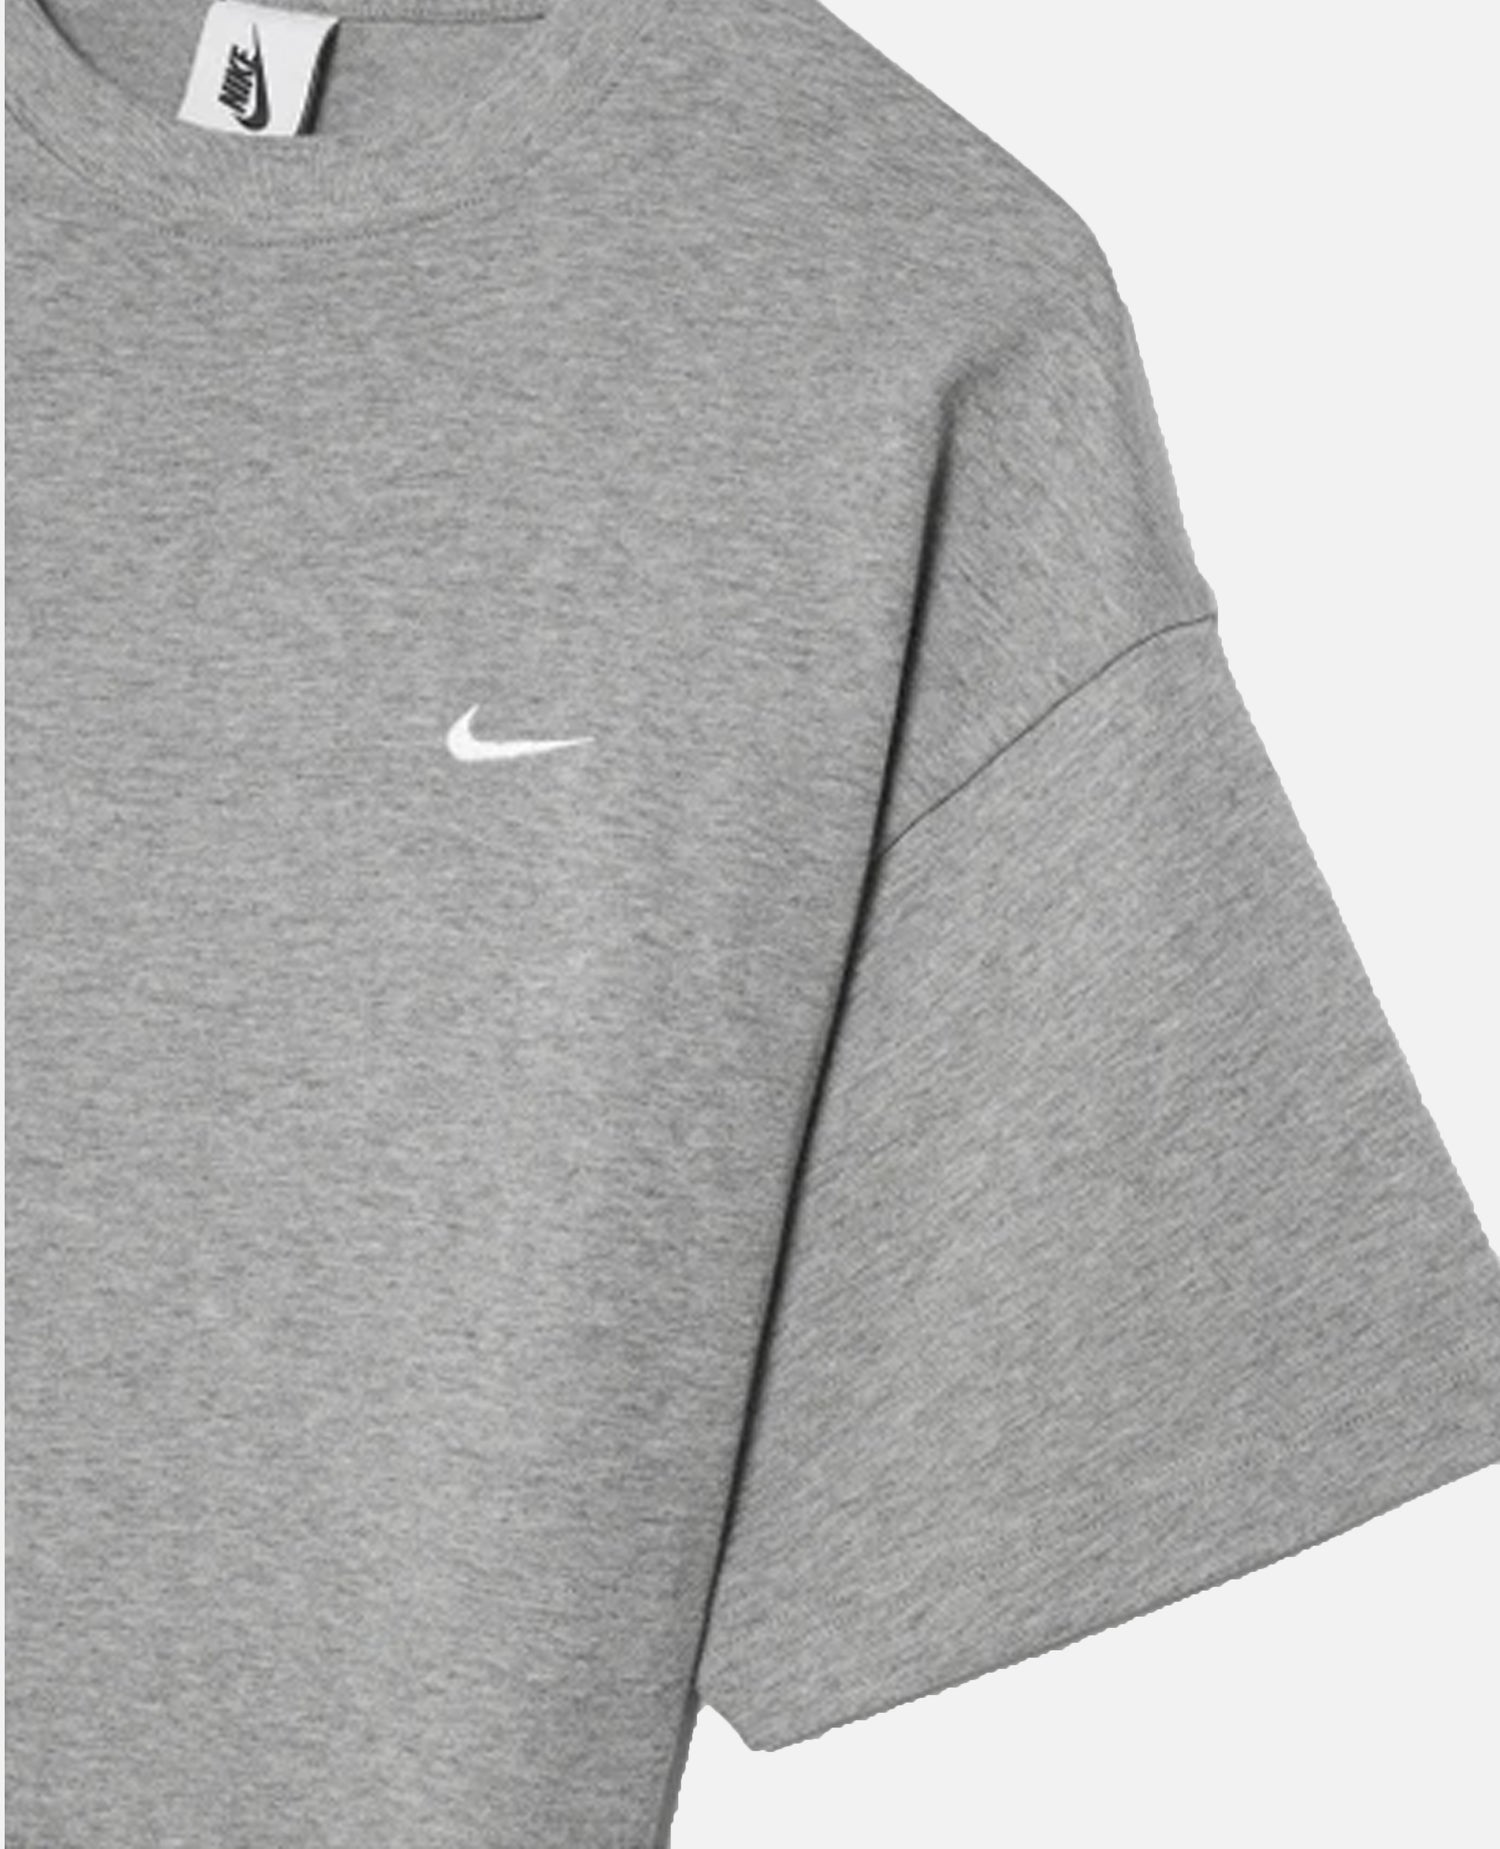 Nike NRG Solo Swoosh T-Shirt (Dark Grey Heather/White)